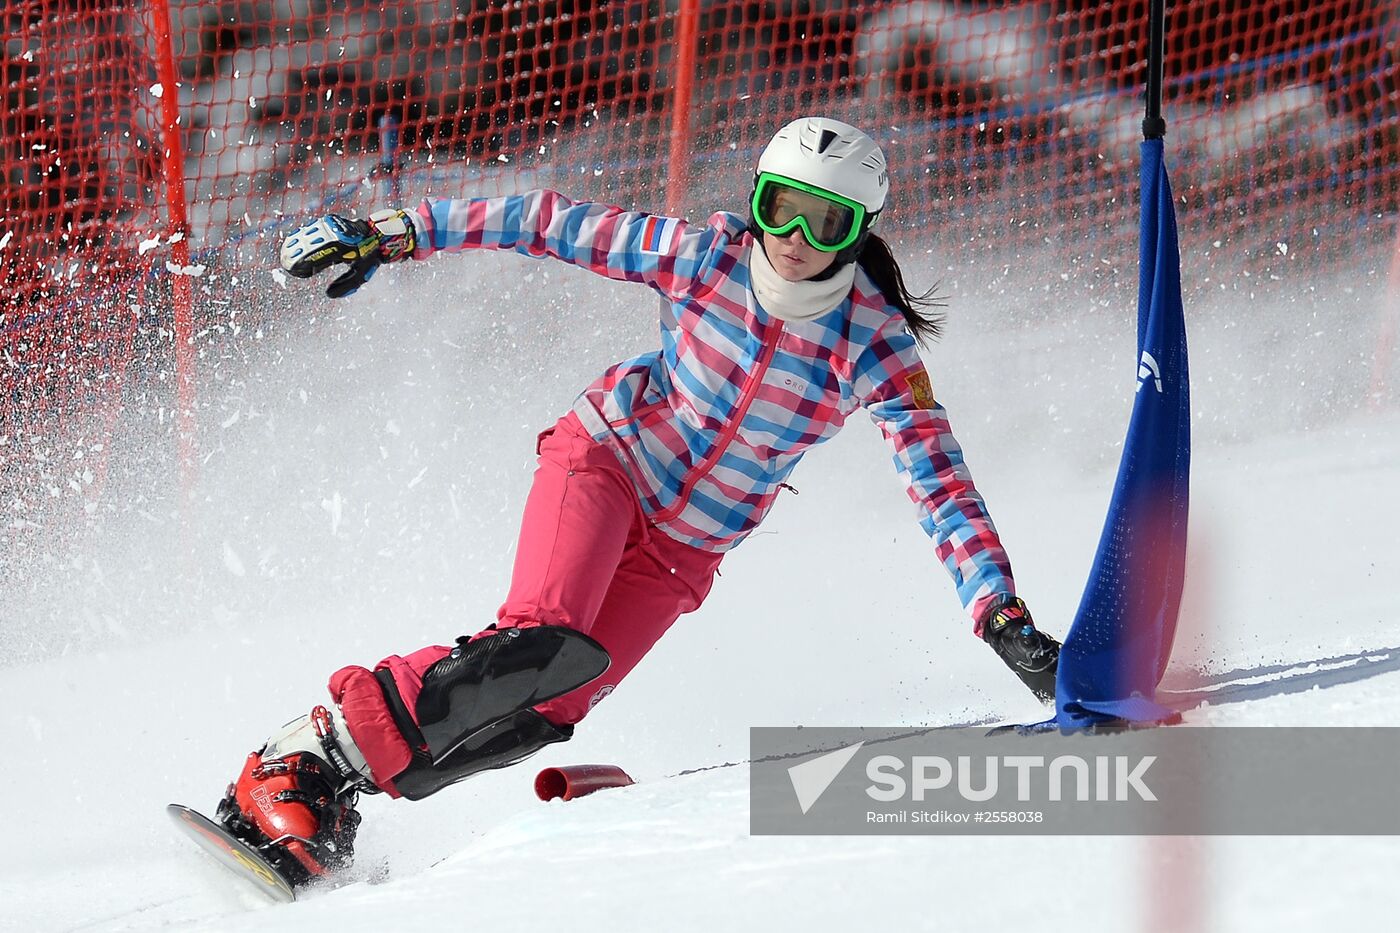 FIS Freestyle Ski and Snowboarding World Championships 2015. Parallel slalom. Training